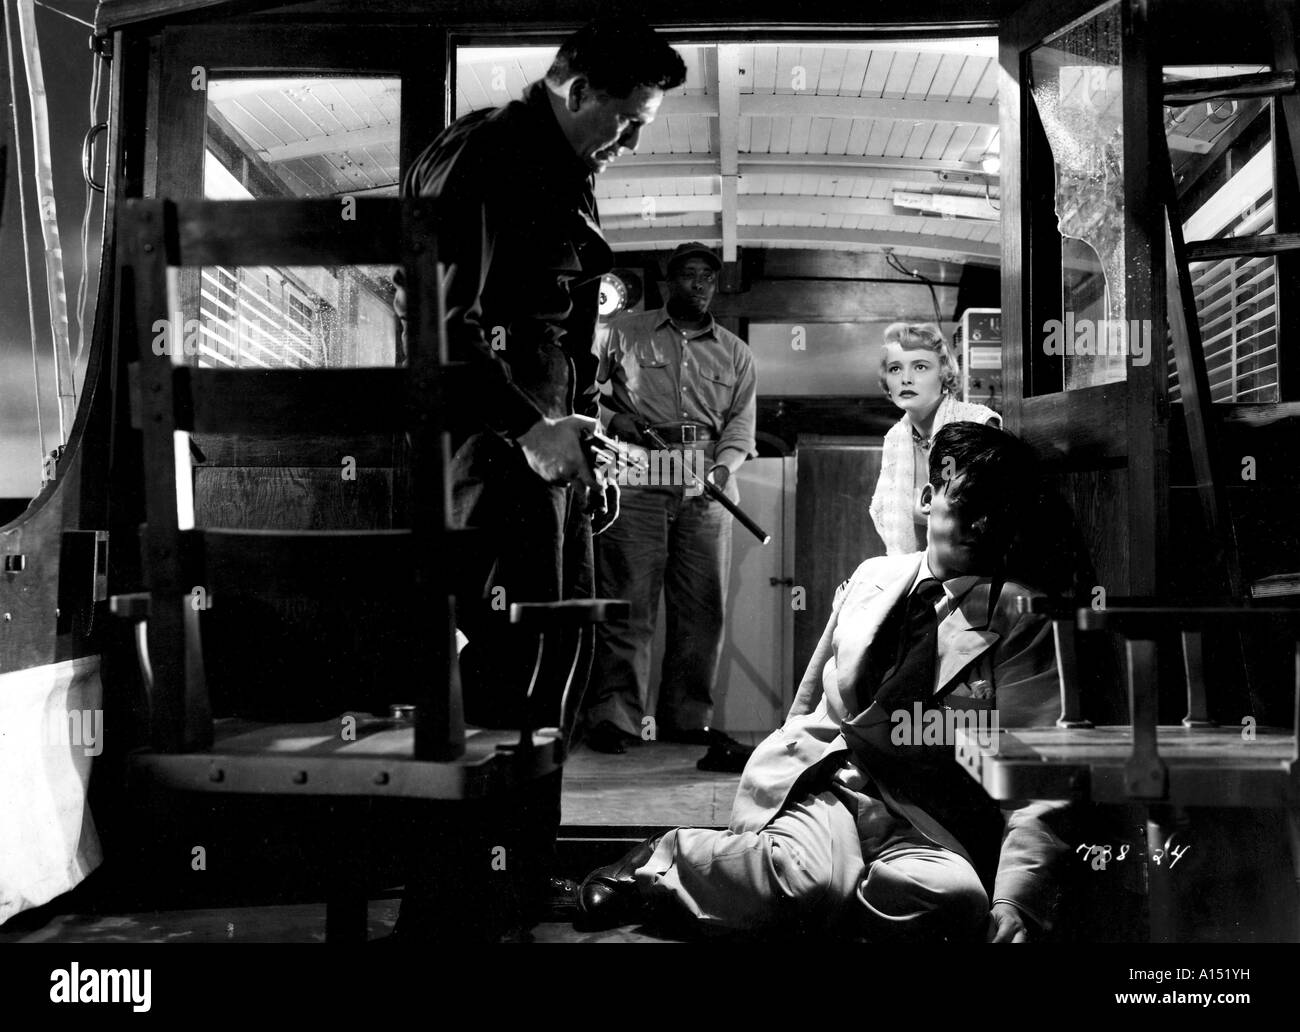 Die Sollbruchstelle Jahr 1950 Direktor Michael Curtiz John Garfield Juano Hernandez Patricia Neal Grundlage Ernest Hemingway s b Stockfoto